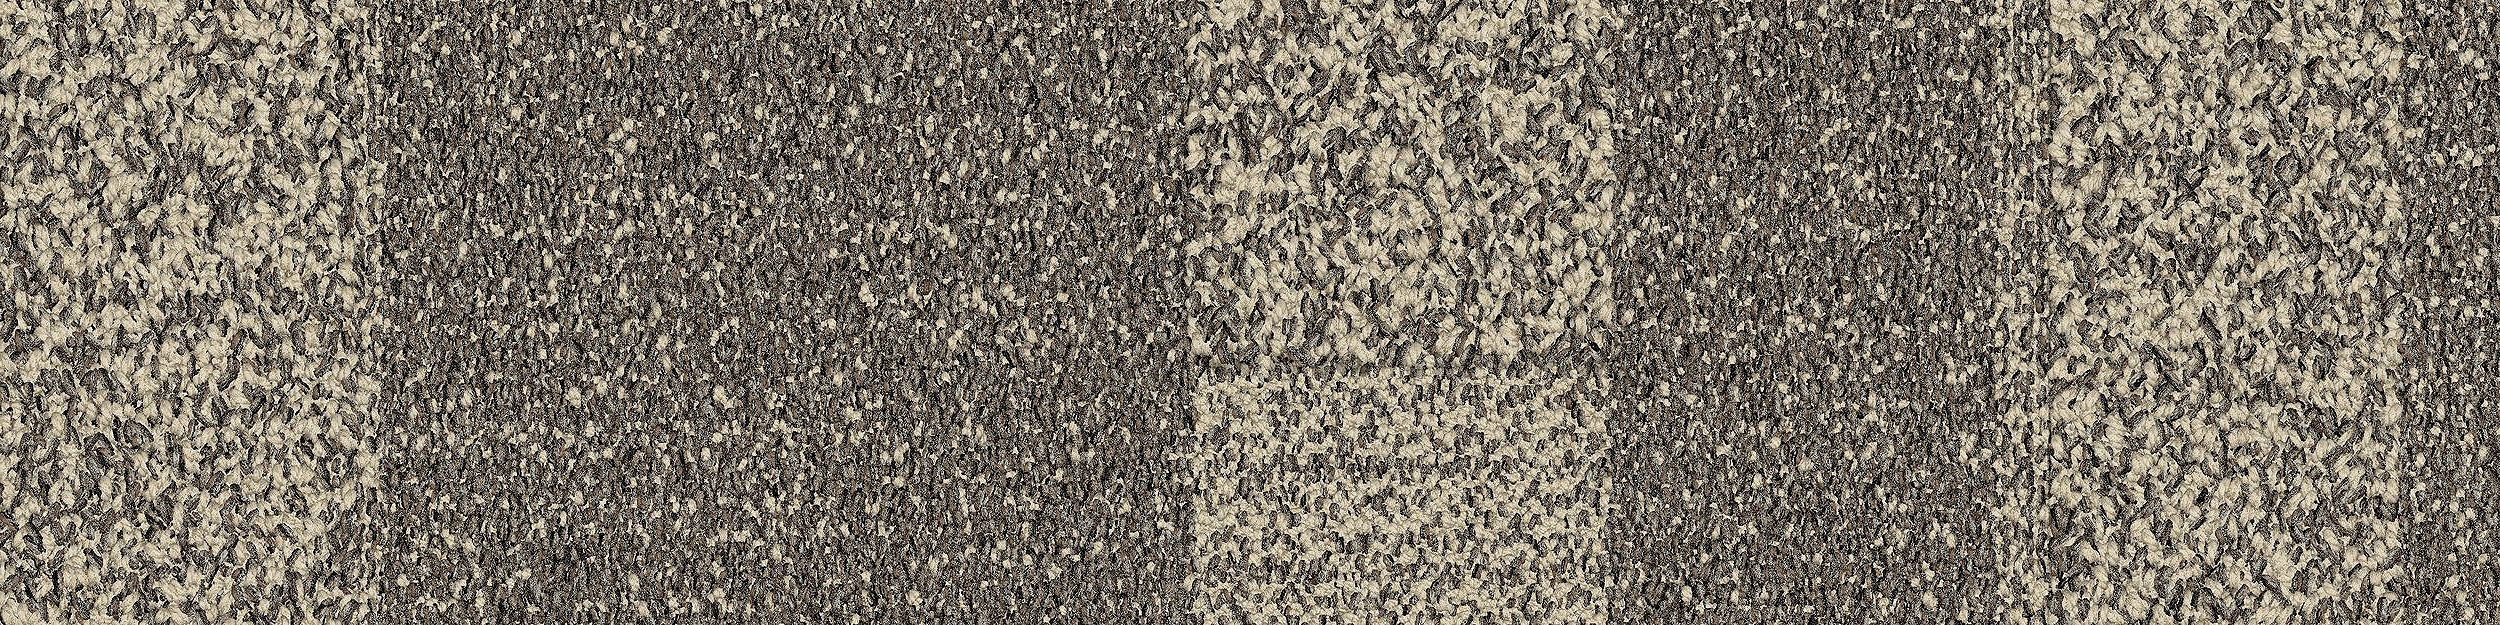 Future Woven Carpet Tile In Fieldstone numéro d’image 4